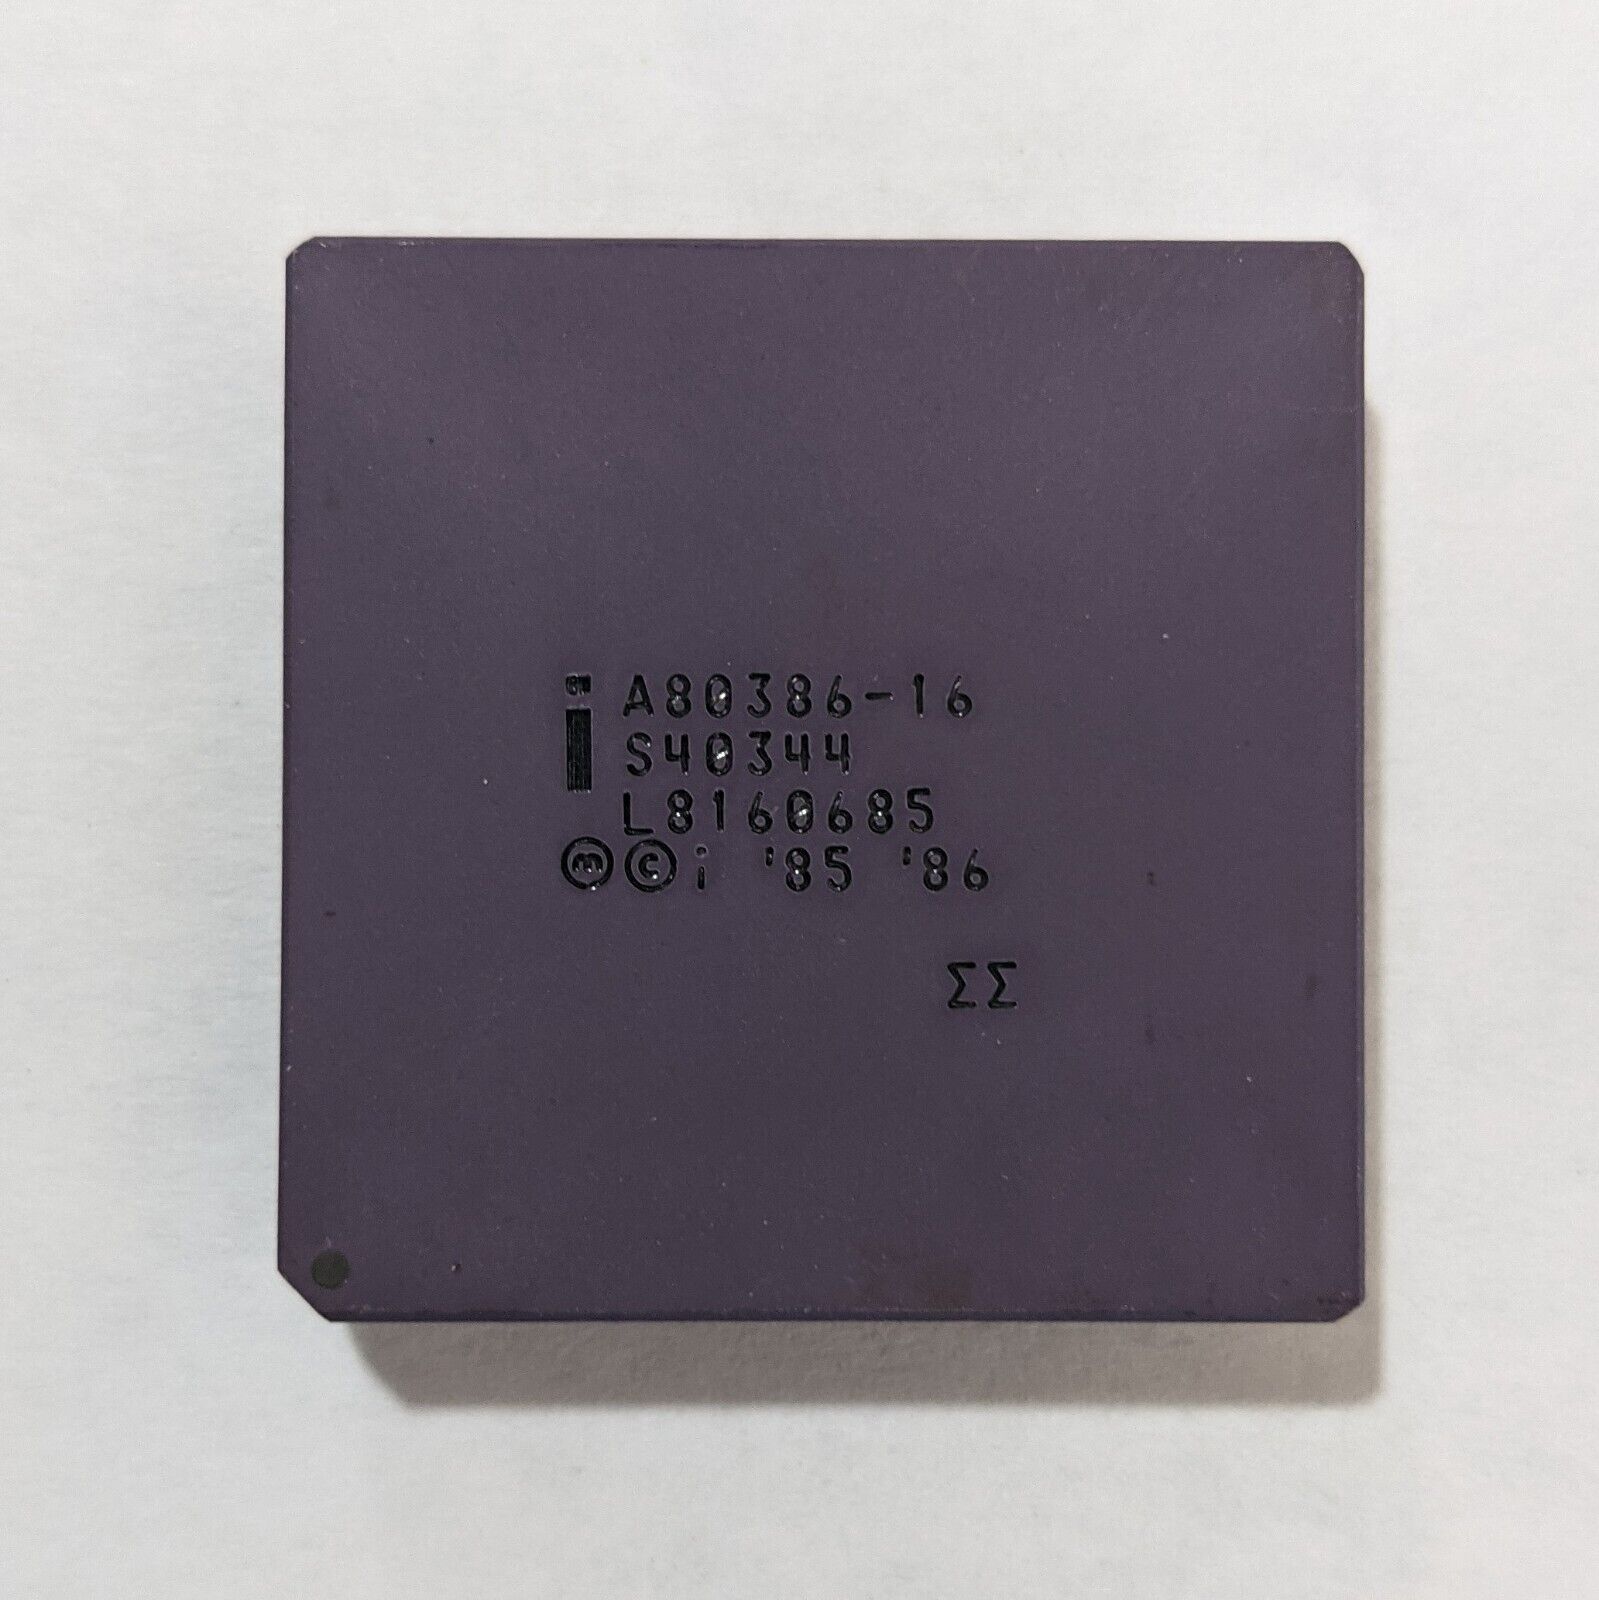 Intel Ceramic CPU A80386-16 / S40344 Processor | Vintage '85 '86 Collectible